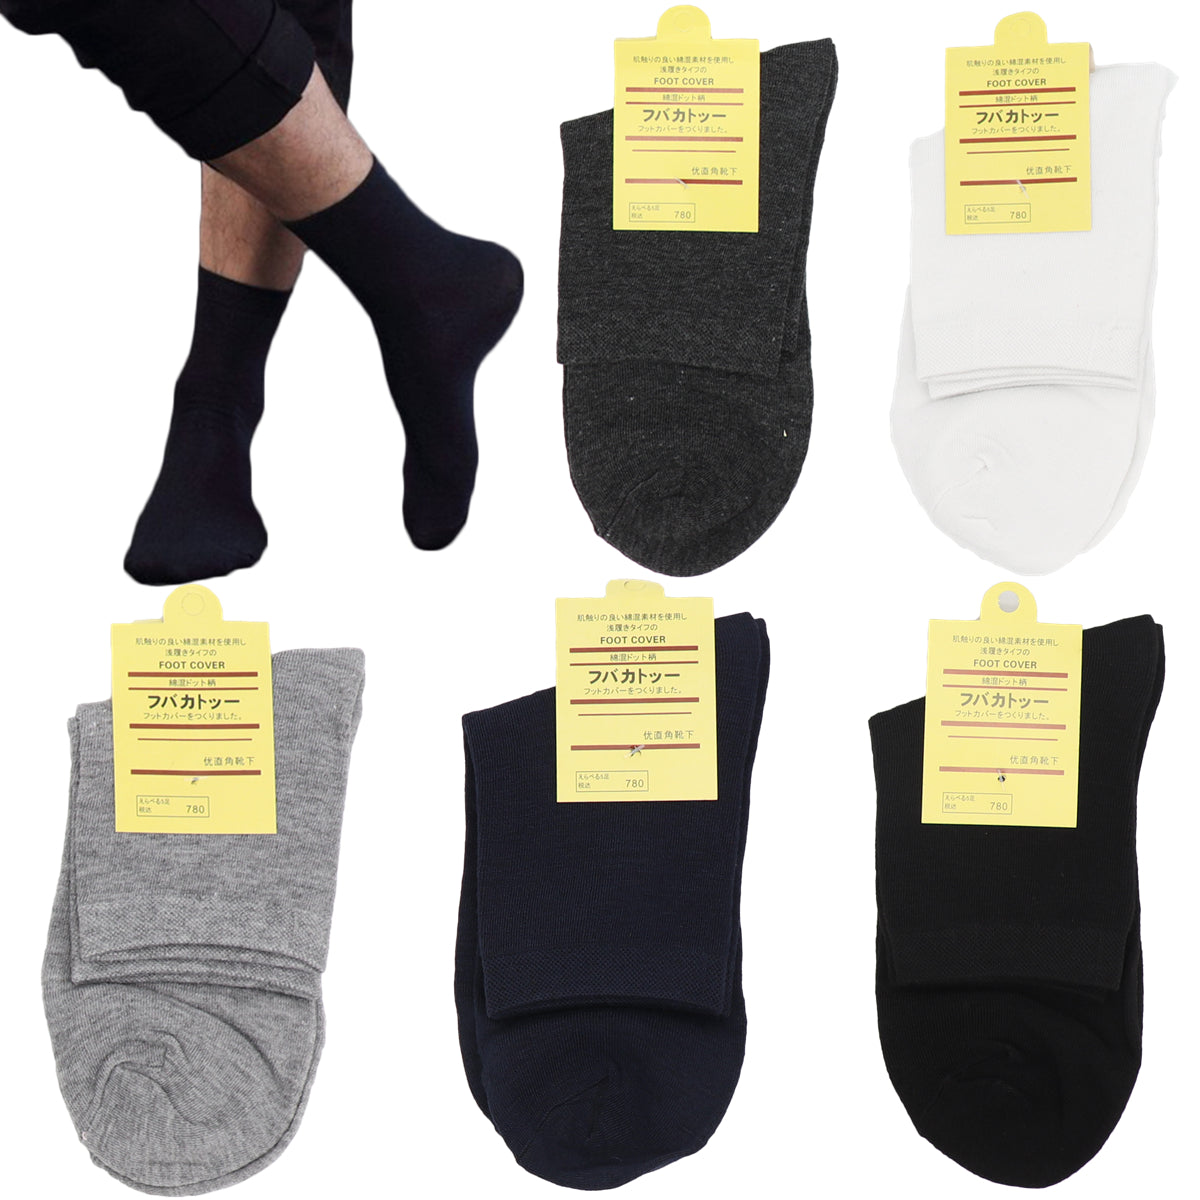 10 Pairs Men's Women's Cotton Breathable Crew Length Socks Work Business Cushion, Black